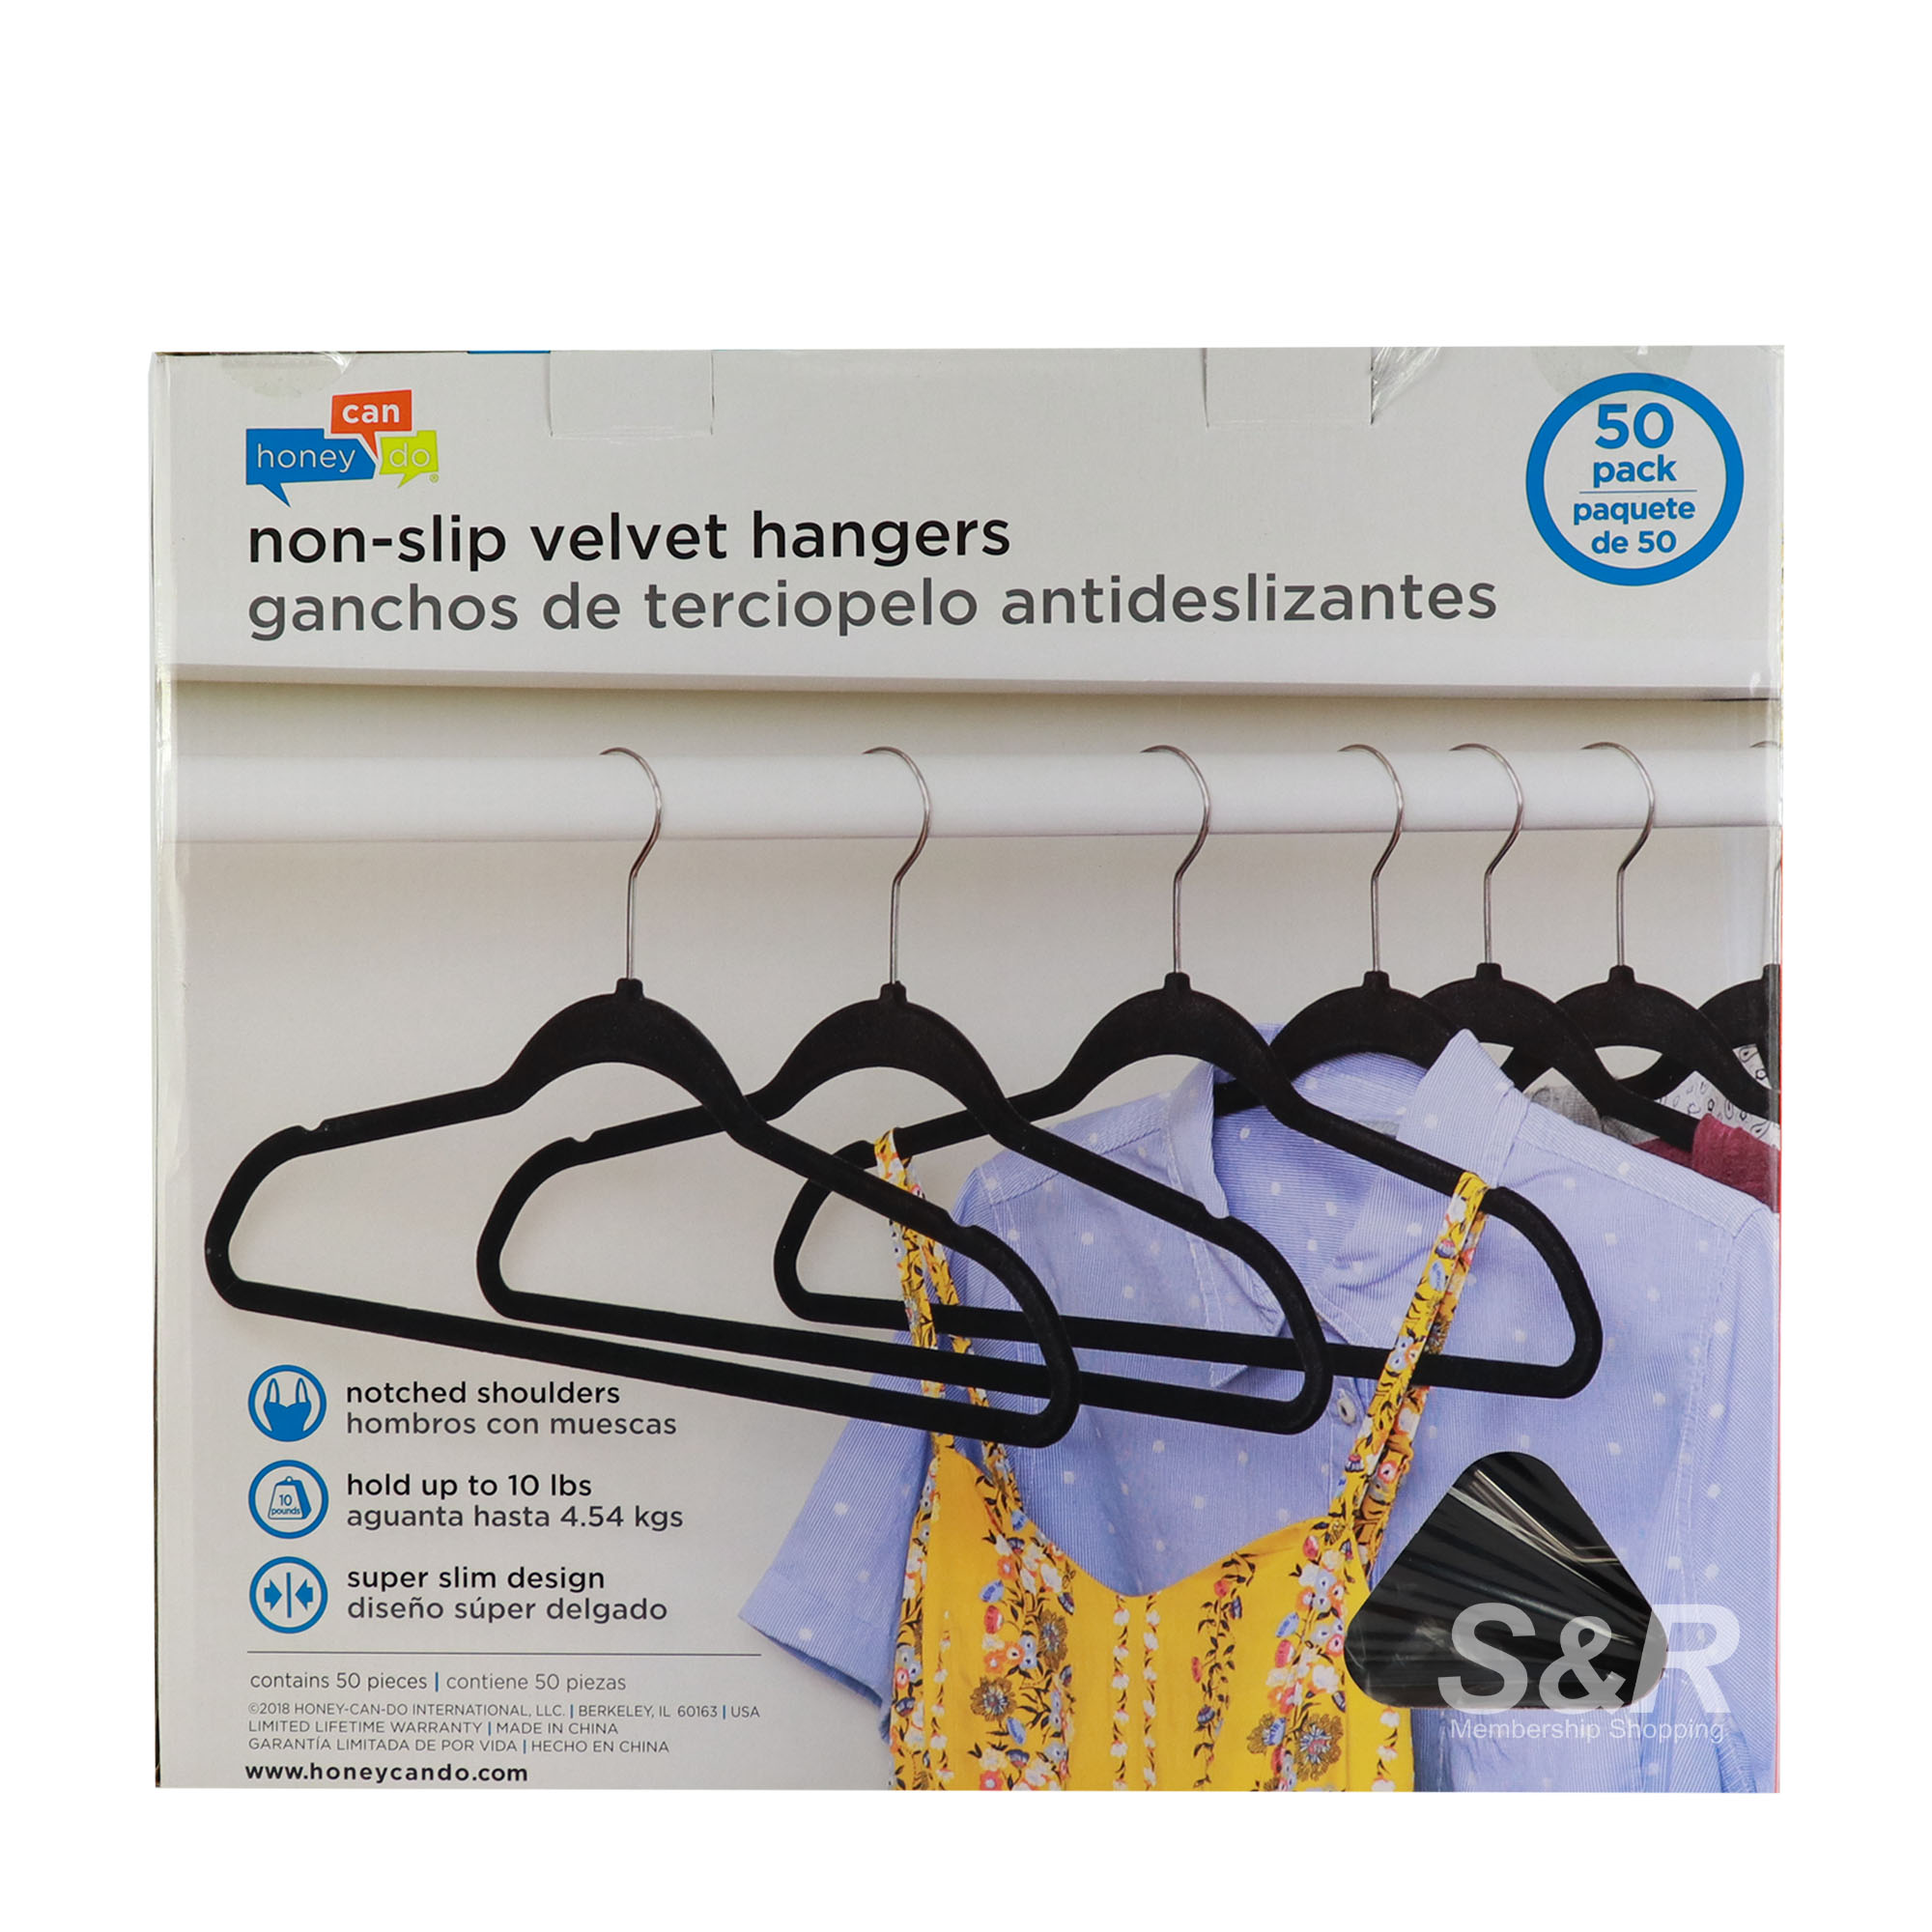 Flocked Hangers - Two 50-packs